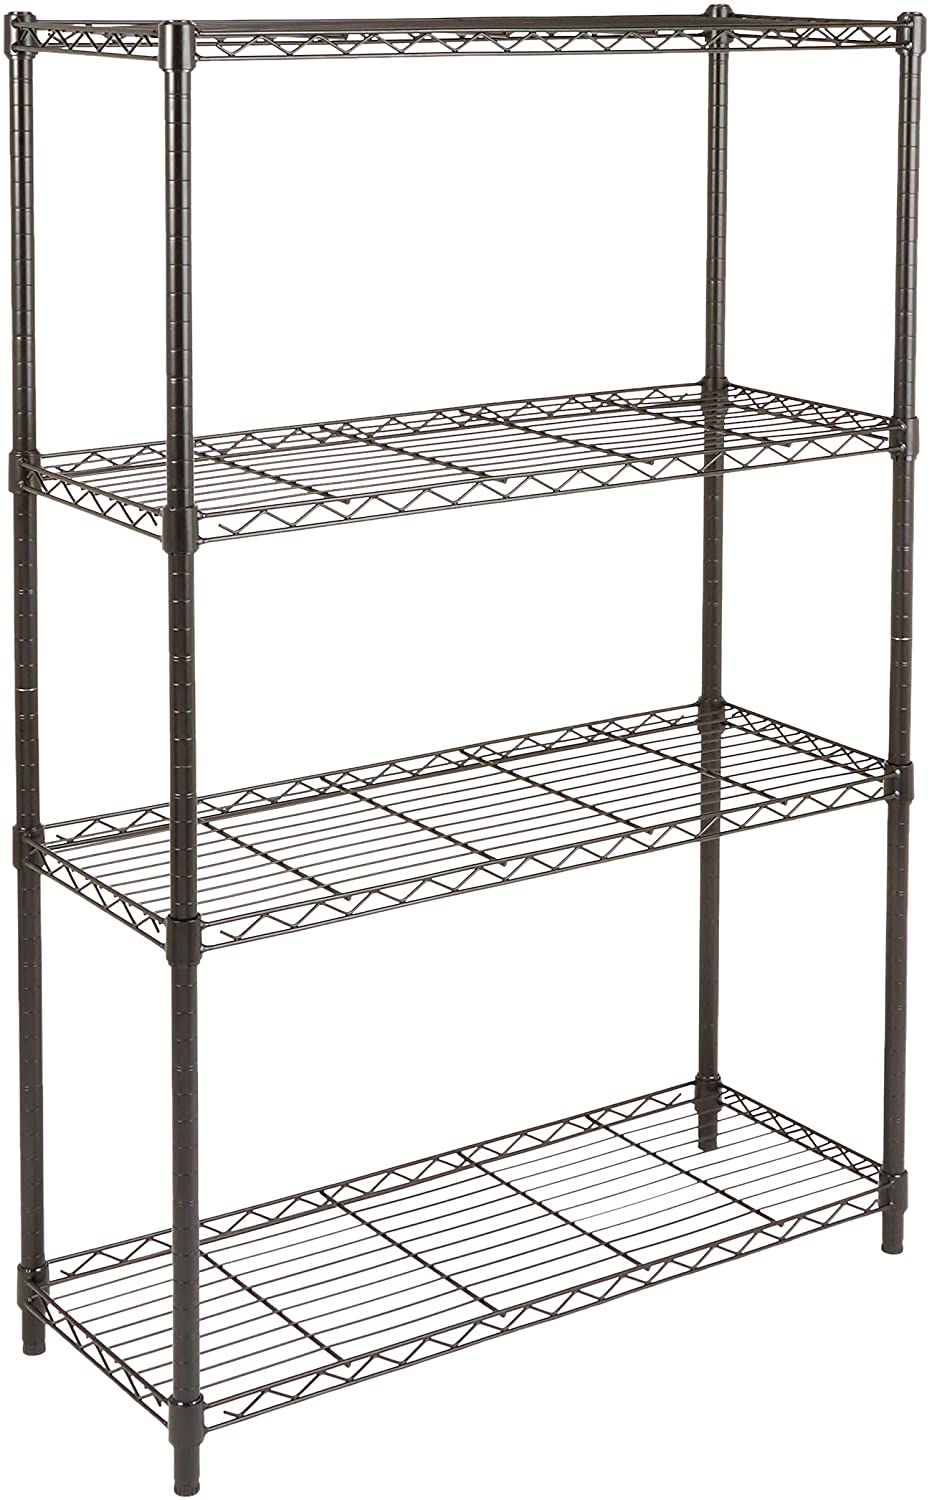 AmazonBasics Easy Assemble Wire Rack Basement Storage, 4-Shelves